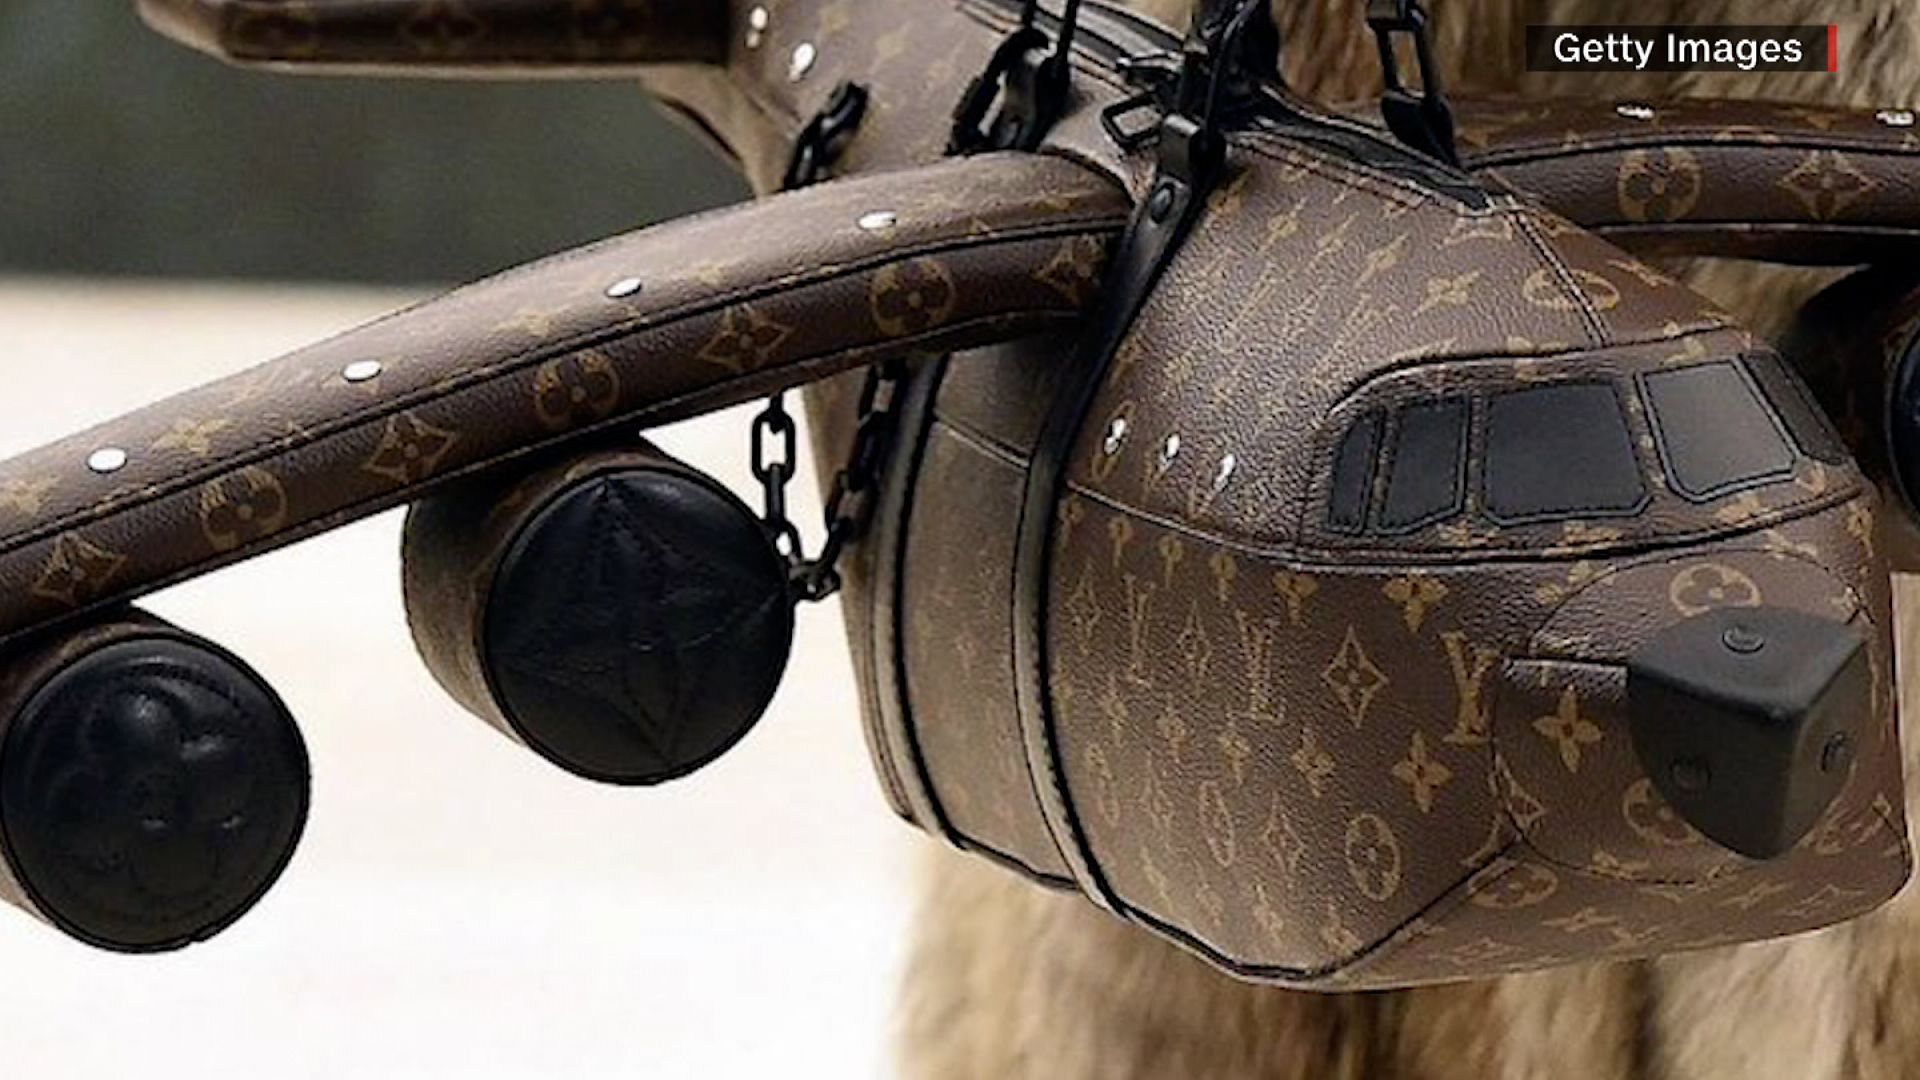 This Louis Vuitton Airplane-Themed Purse Costs $39,000 - Nerdist